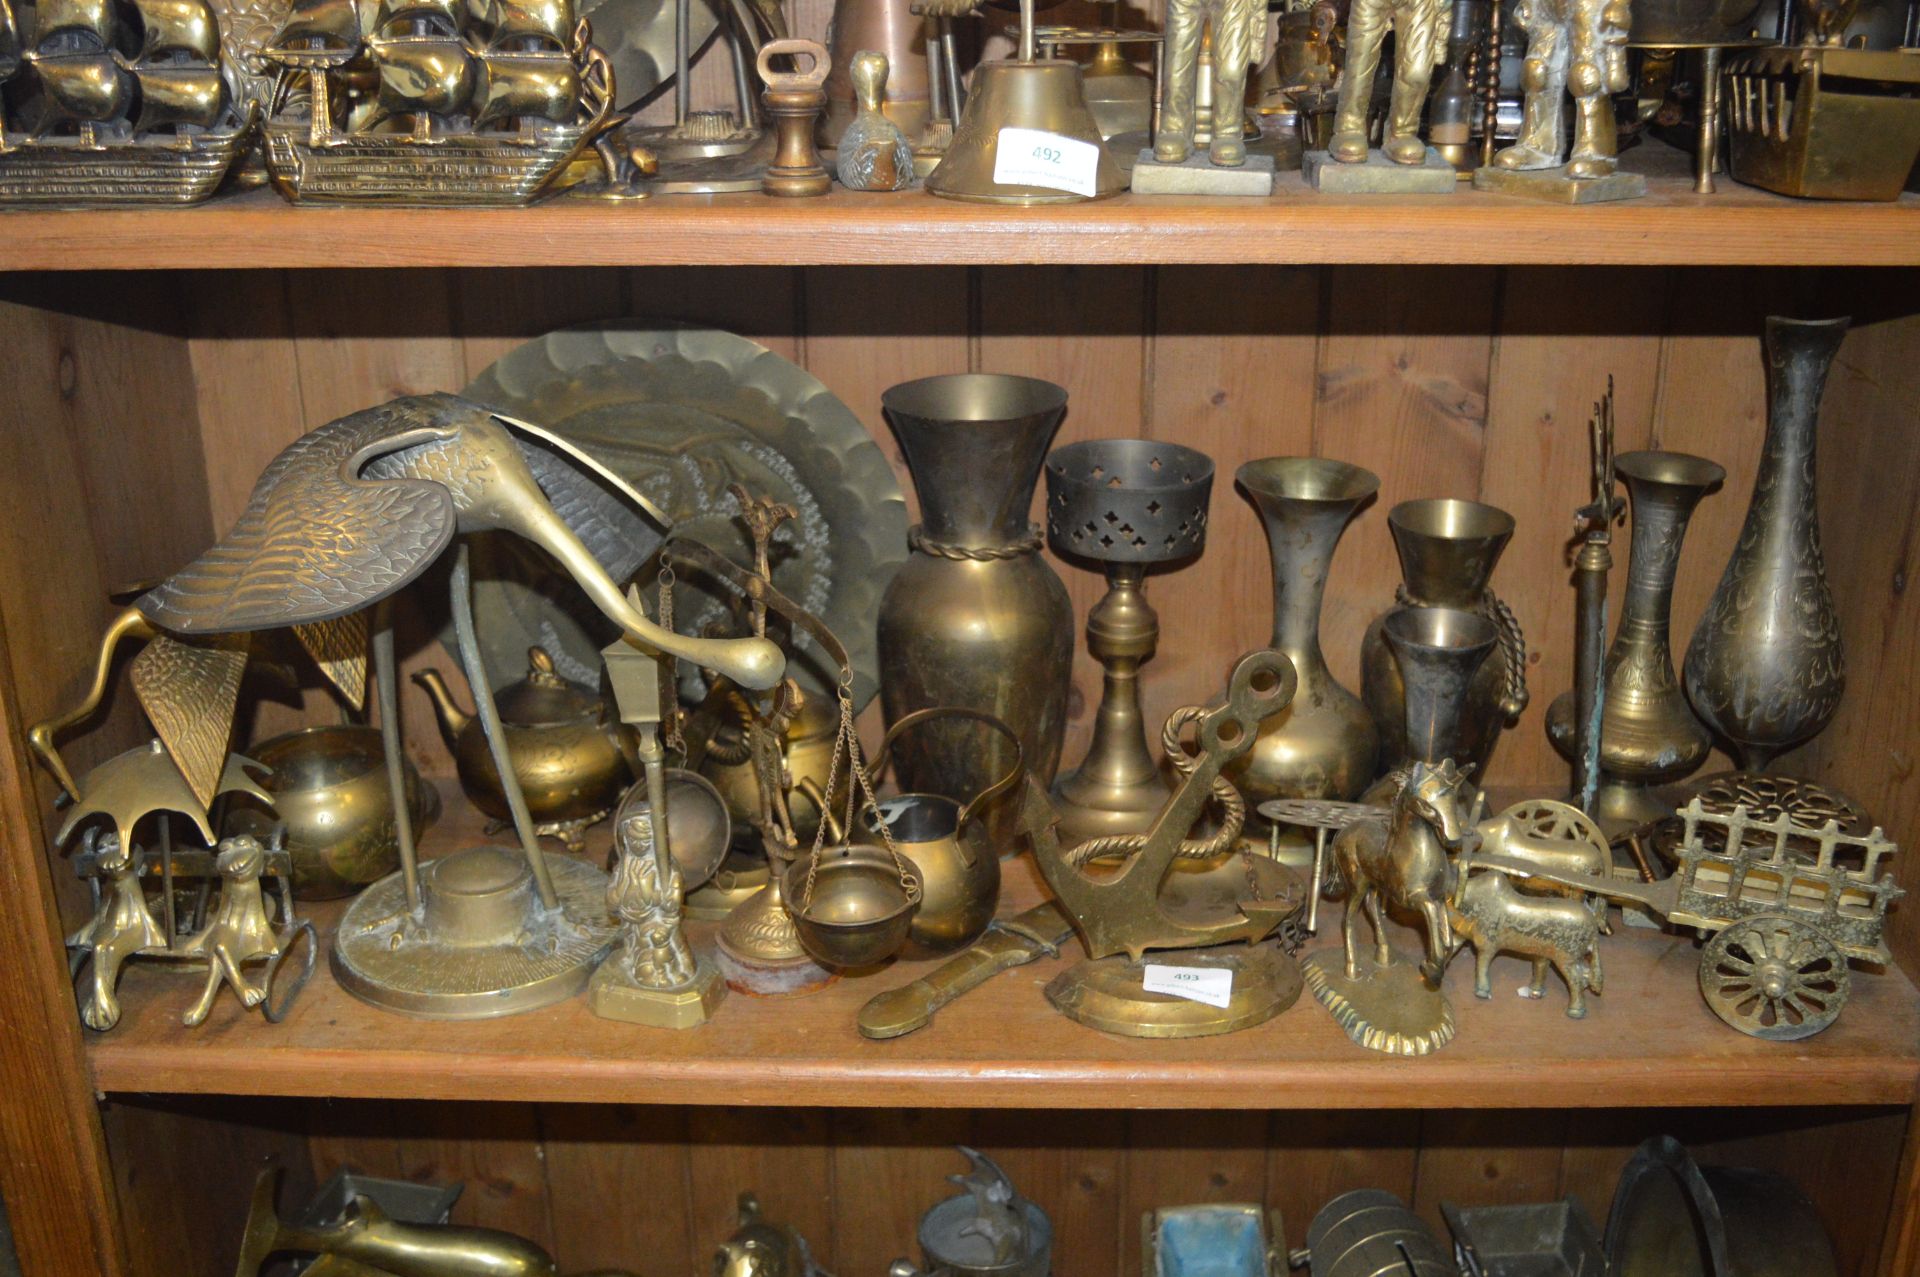 Shelf of Assorted Brass Ornaments, Vases, etc.